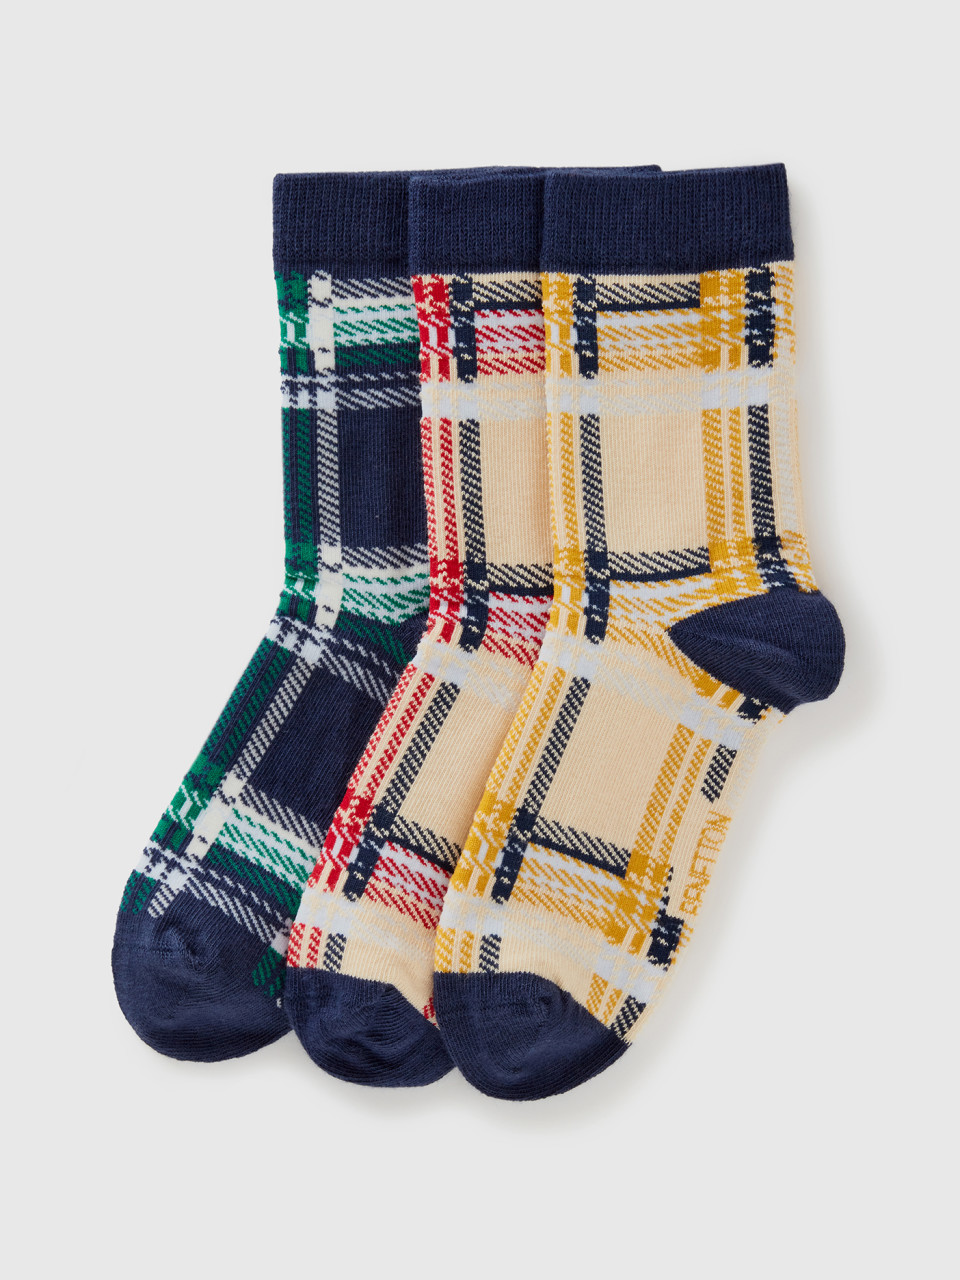 Benetton, Long Tartan Socks, Multi-color, Kids